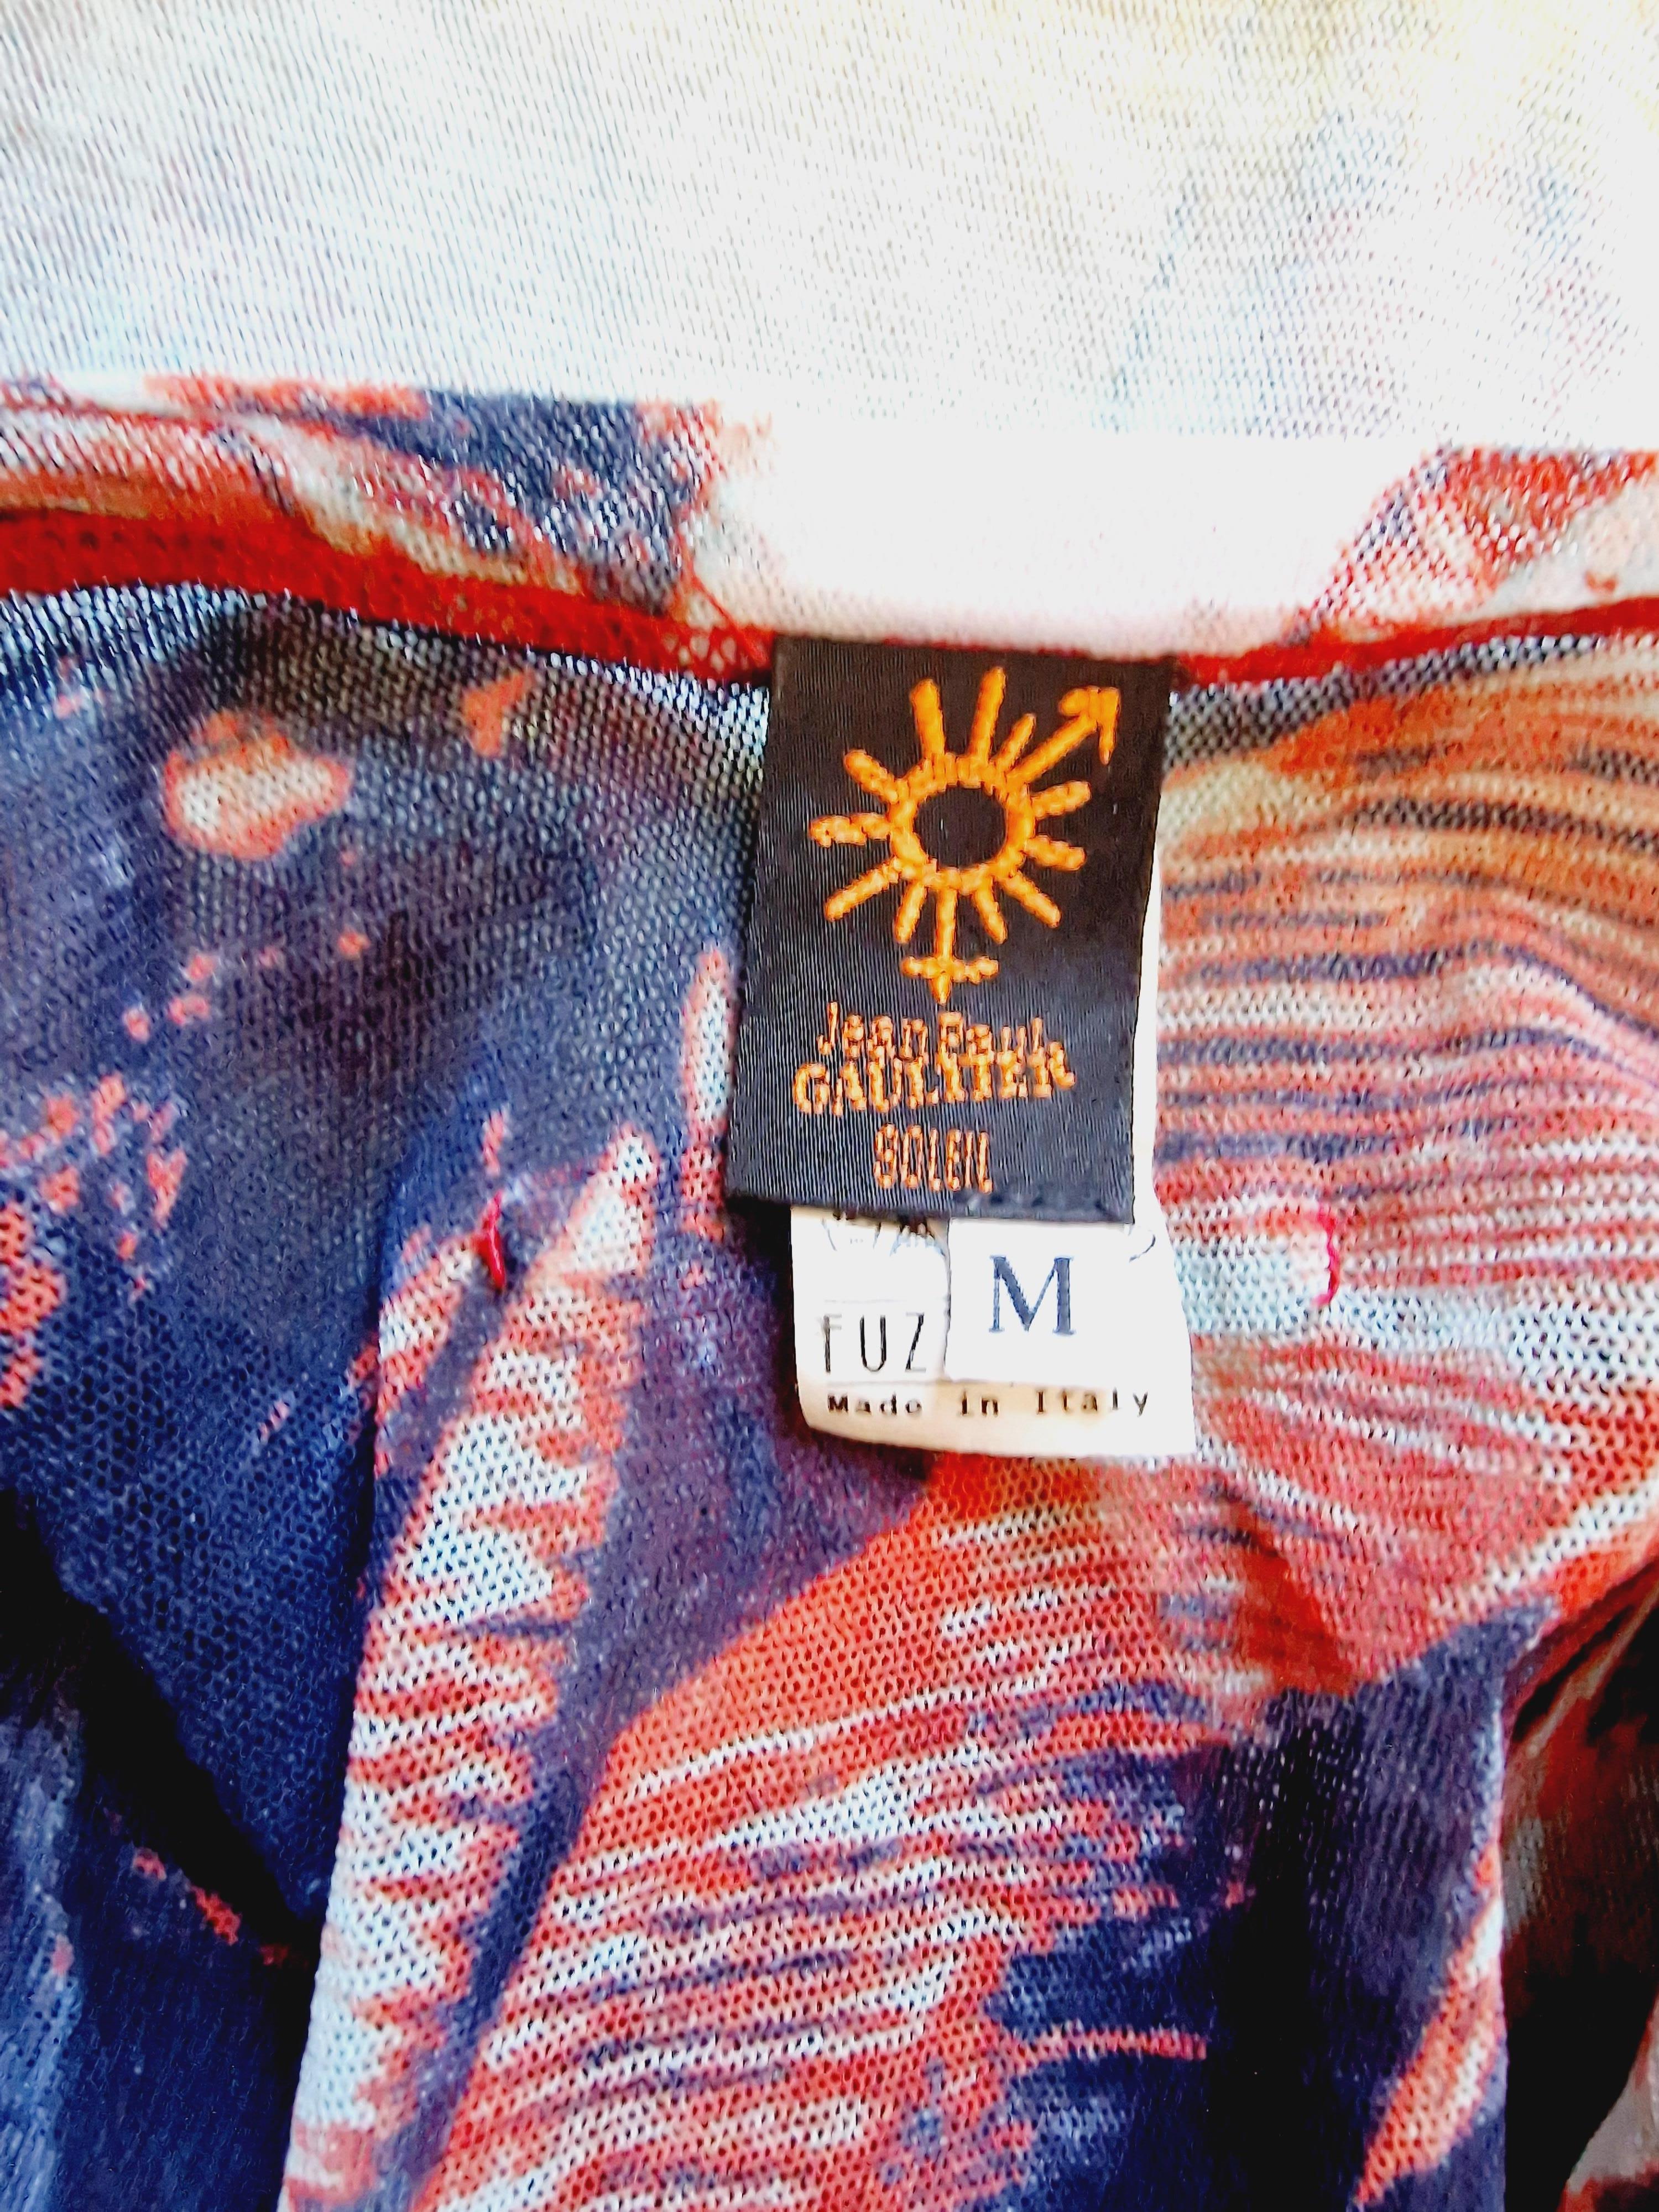 Jean Paul Gaultier Mesh Palm Tree Tropical Vintage Transparent Shirt Tee Top  For Sale 5